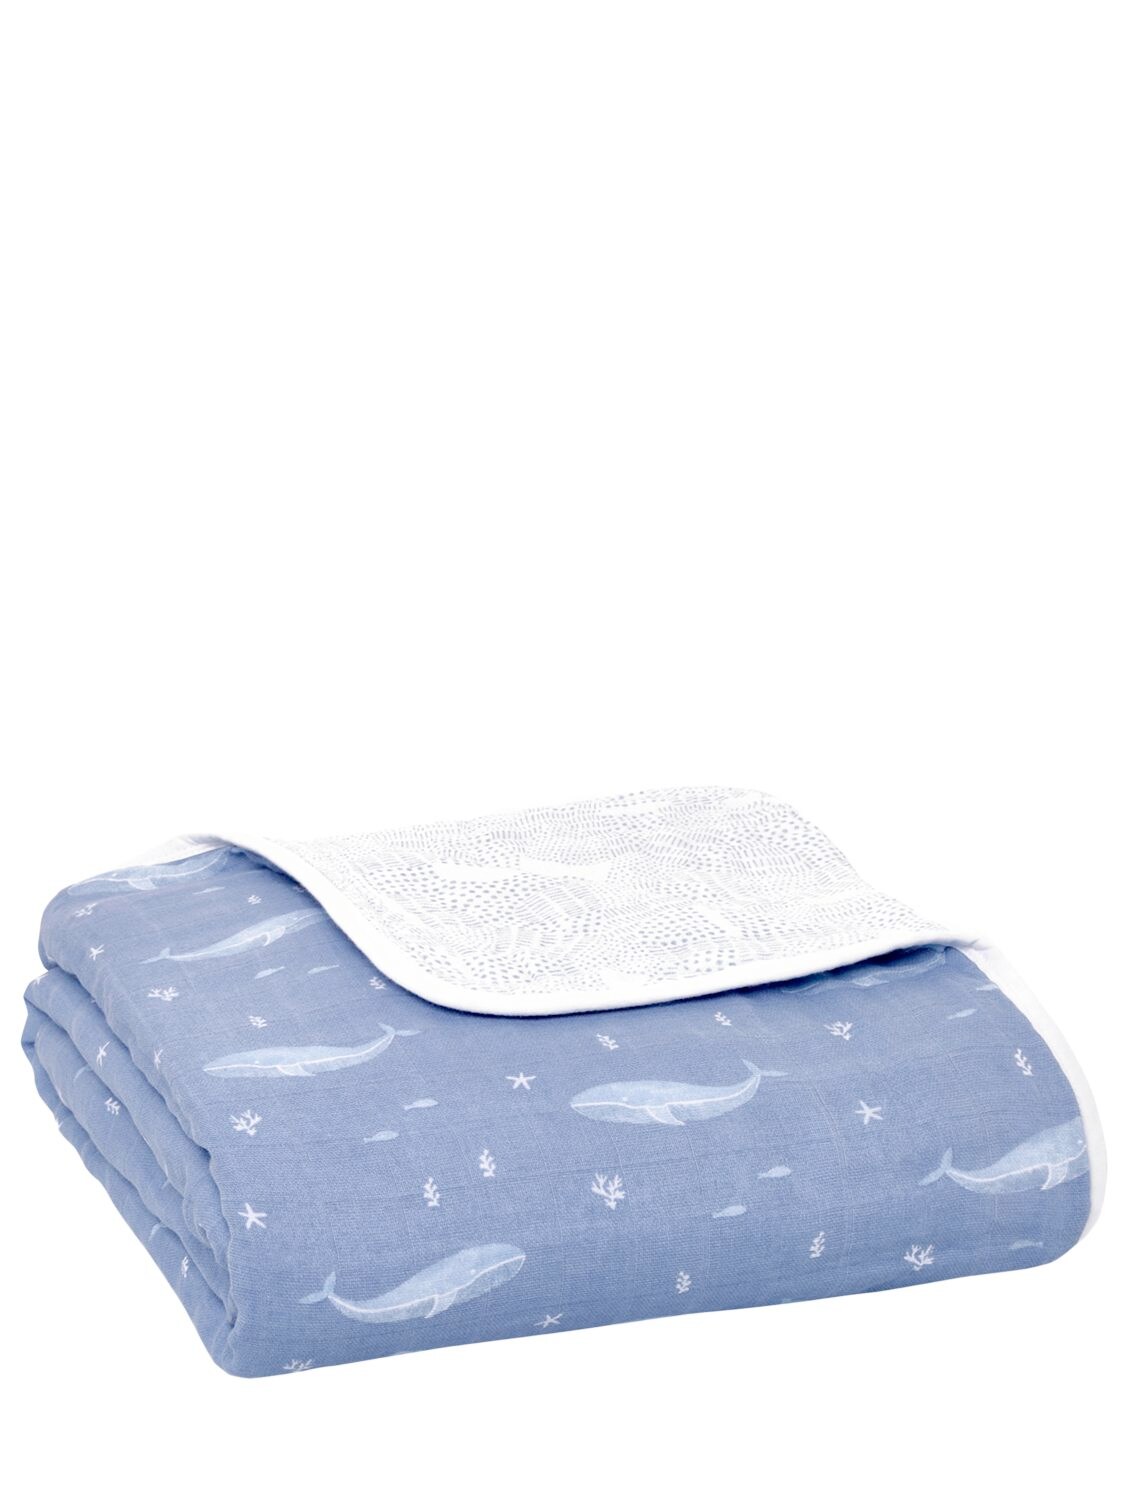 Aden + Anais Printed Organic Cotton Muslin Blanket In Blue